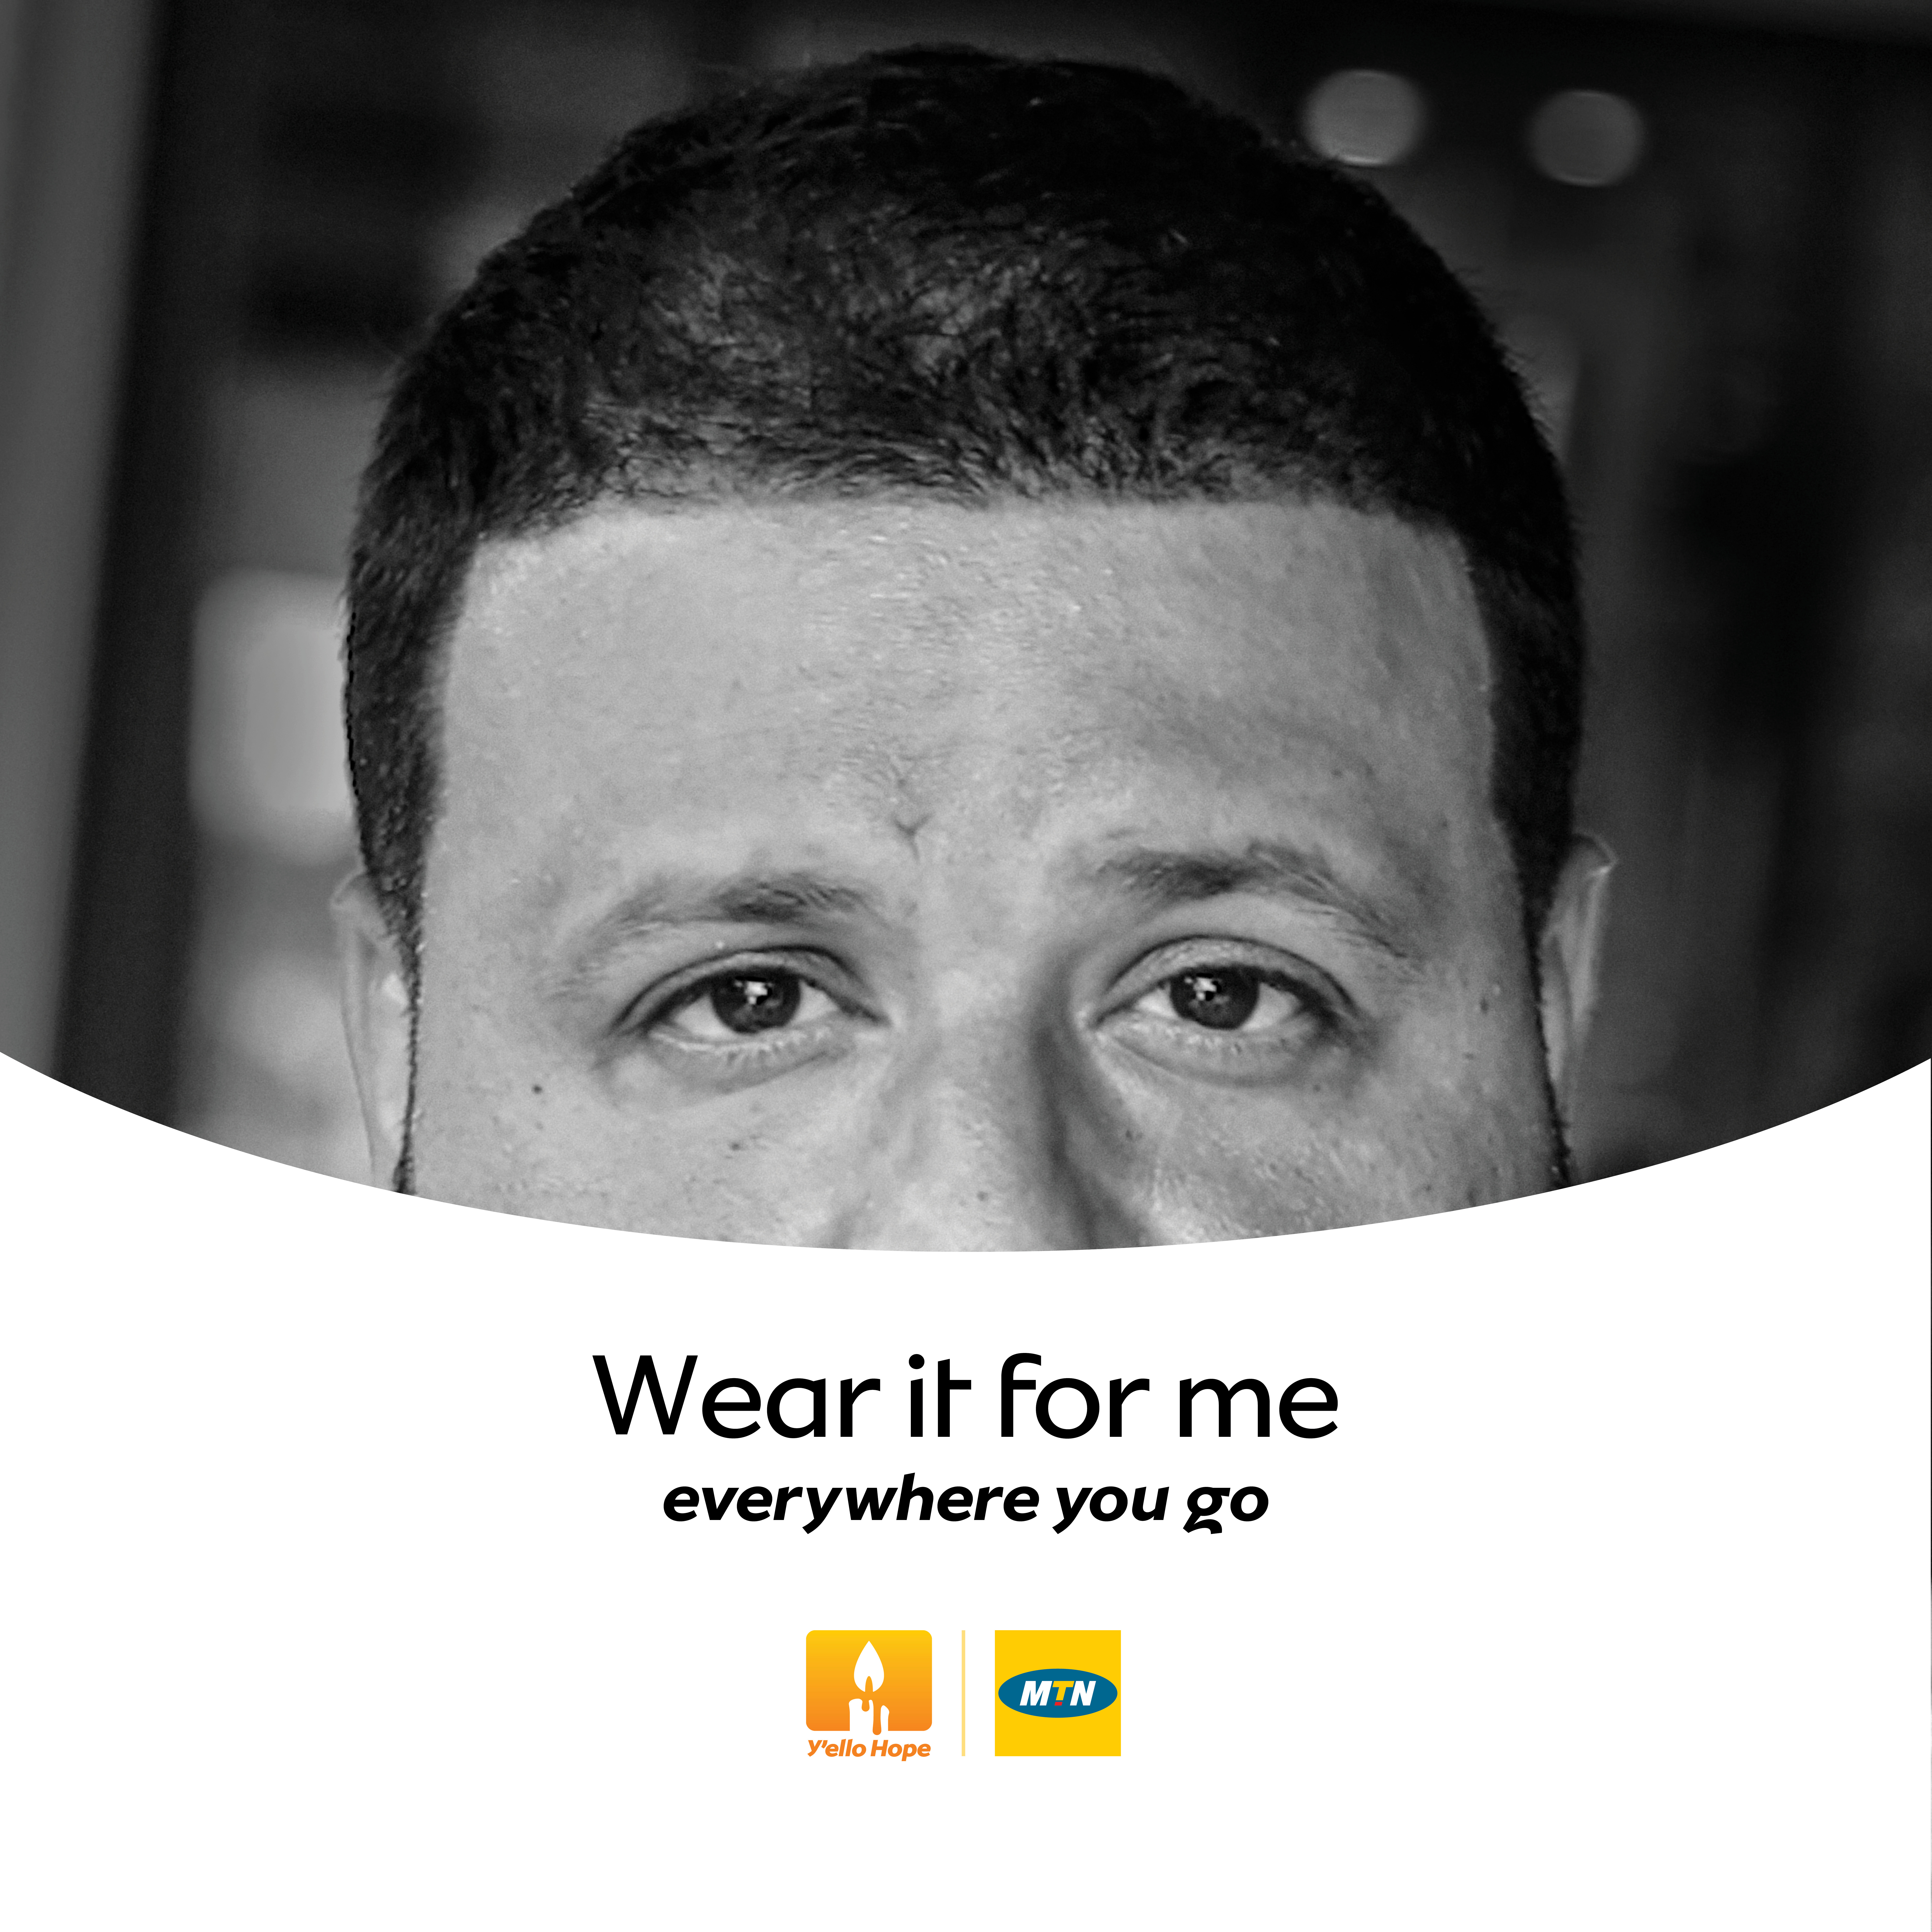 DJ Khaled encourages people everywhere to #WearItForMe